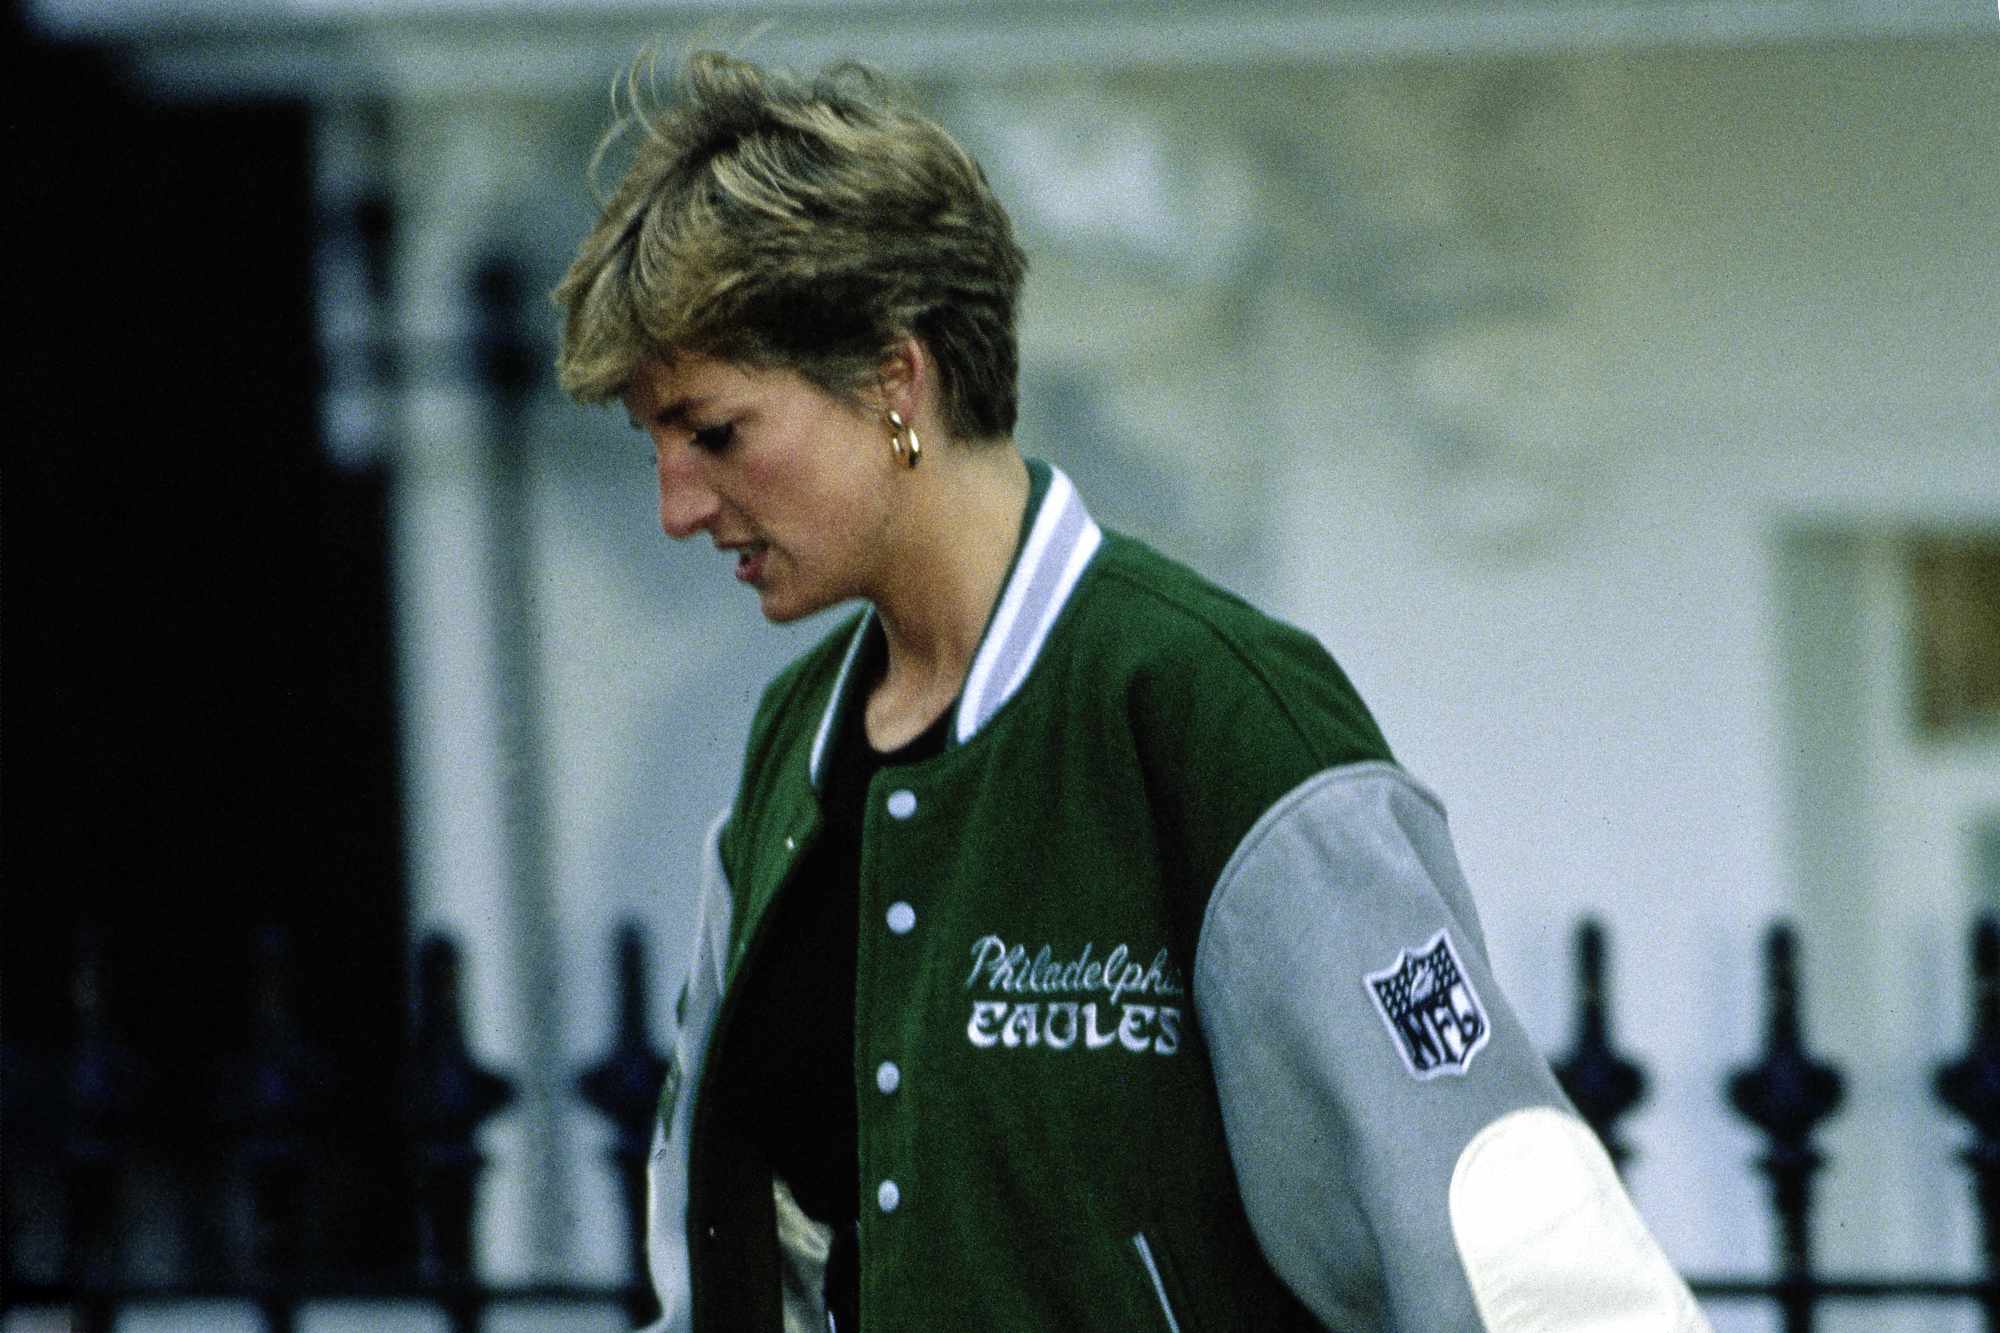 Princess Diana seen in 1997 wearing a green Philadelphia Eagles jacket